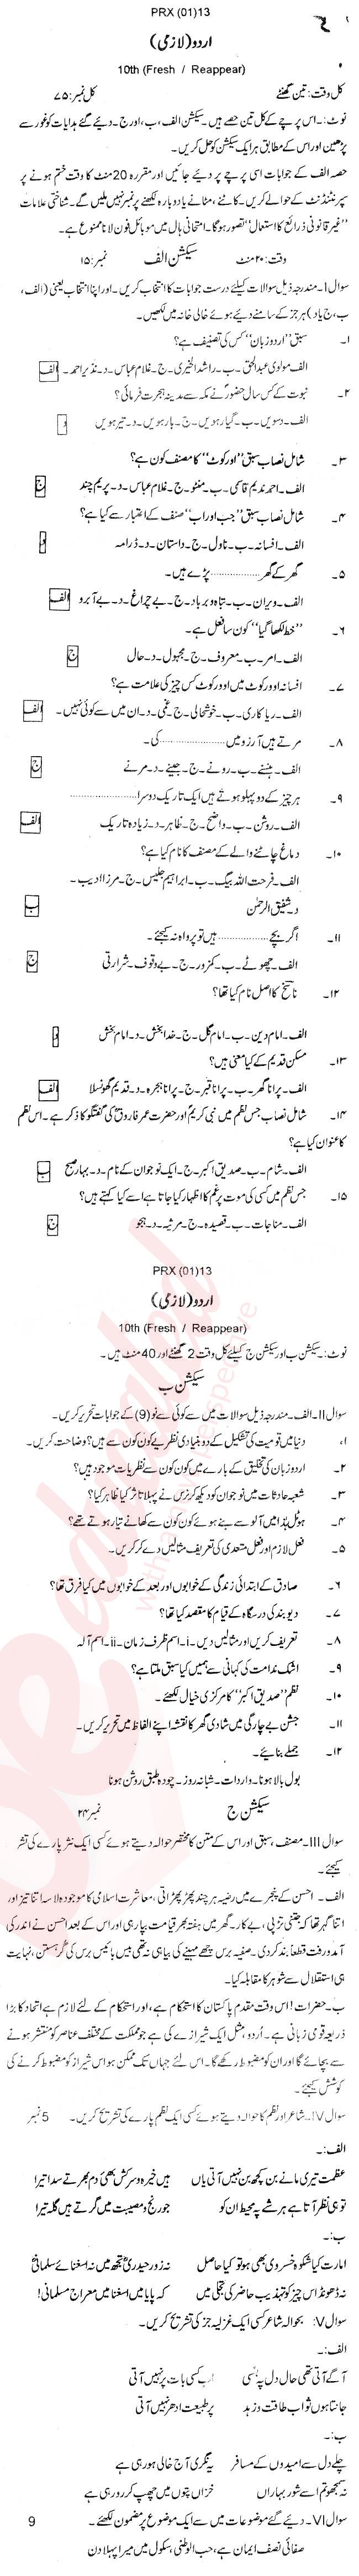 Urdu 10th Urdu Medium Past Paper Group 1 BISE Peshawar 2013